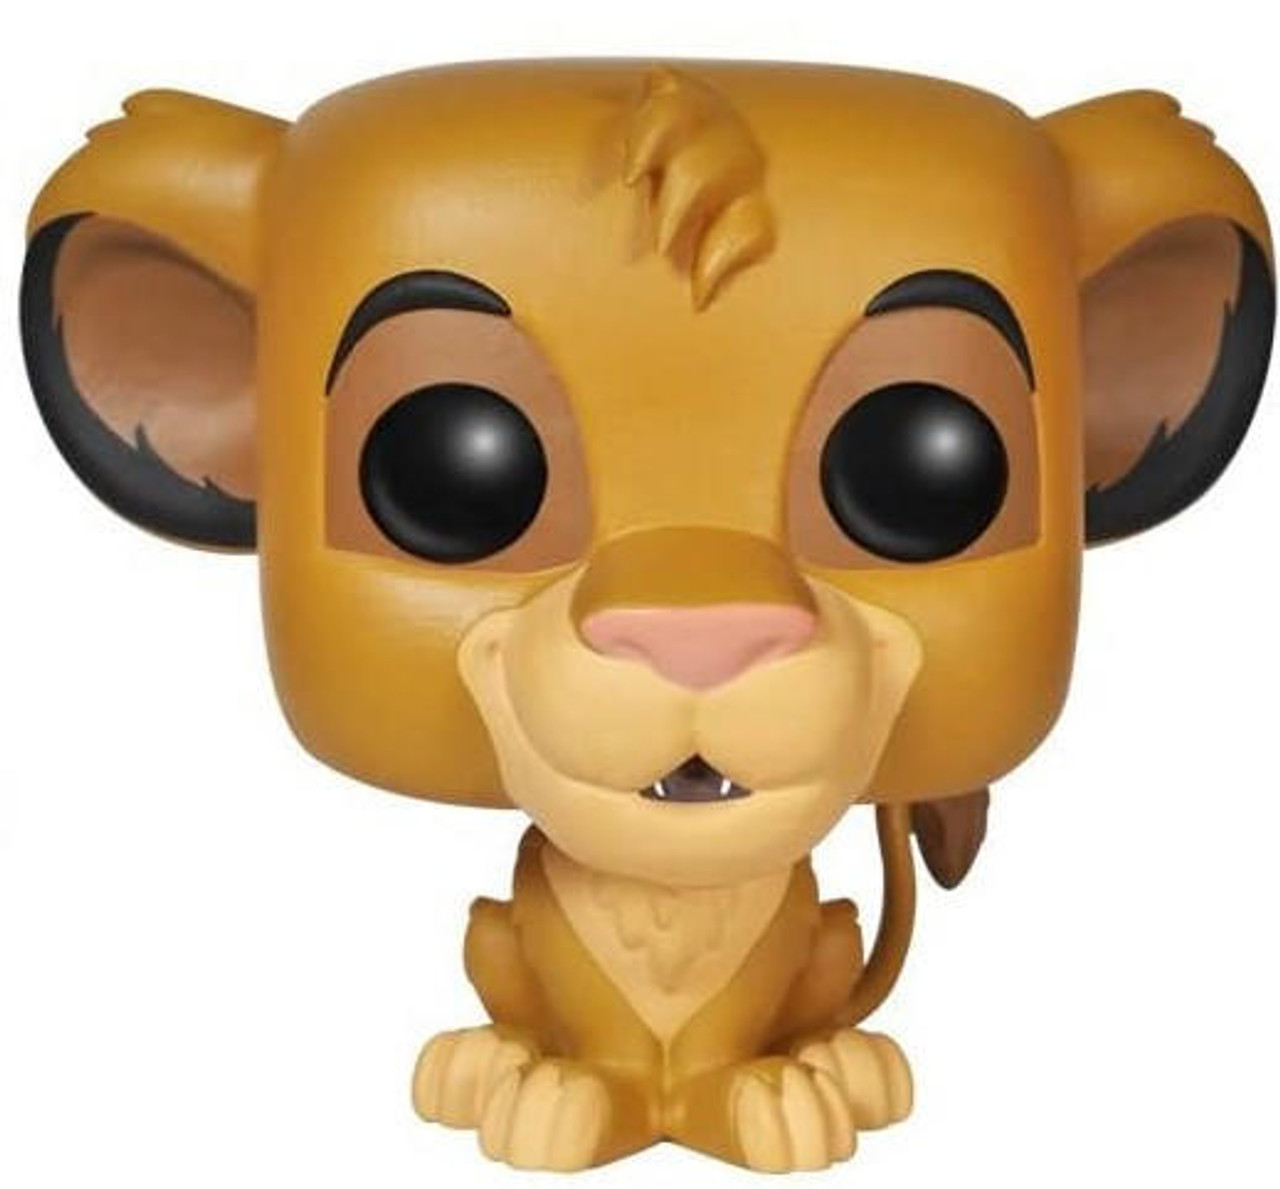 Pop! Disney - Lion King: Simba 85